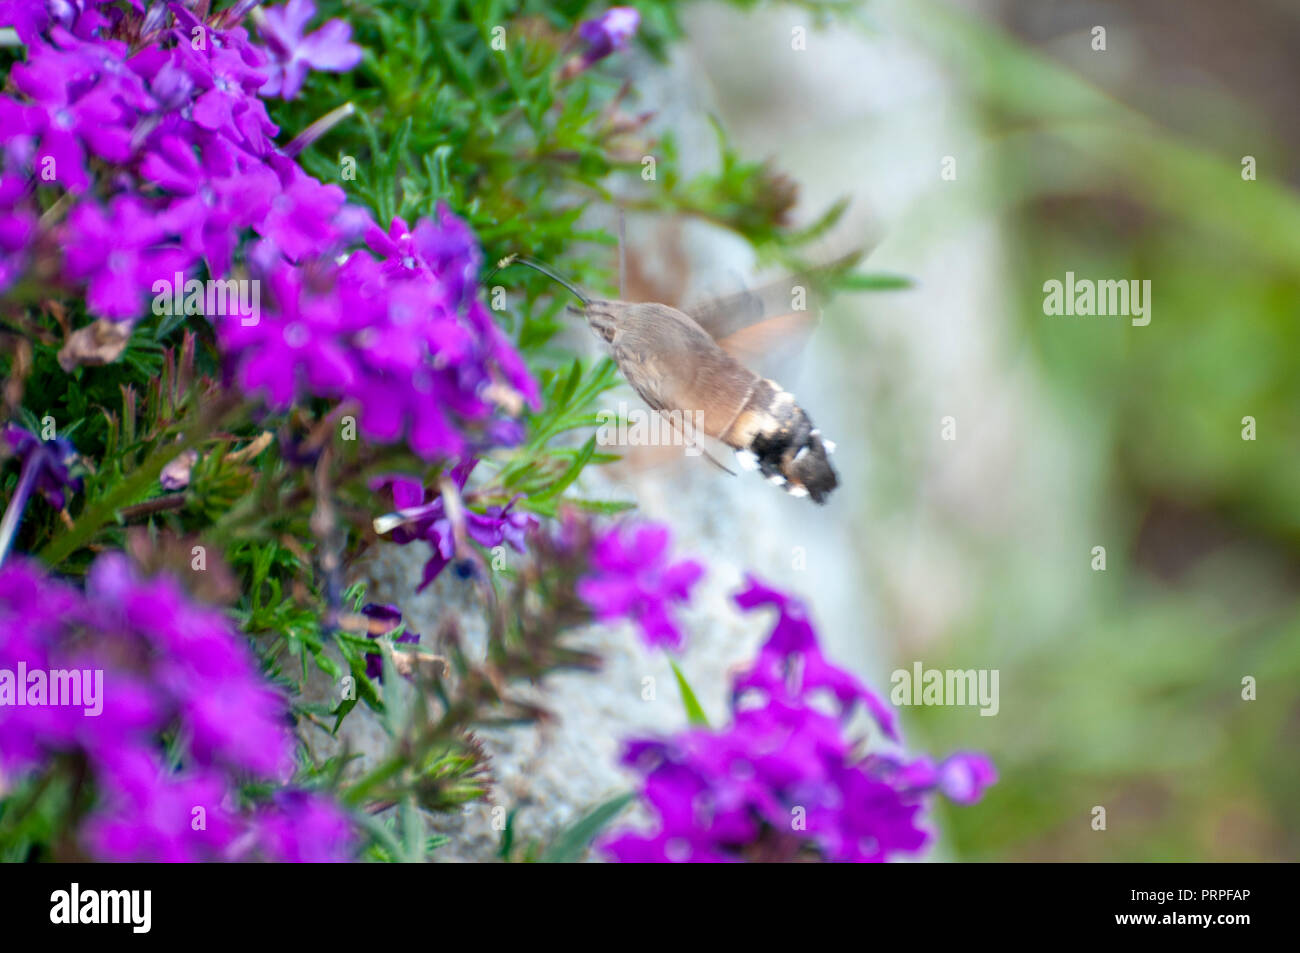 Hummingbird hawk-moth (Macroglossum stellatarum) feeding on nectar. Photographed in St. Moritz, Switzerland in September Stock Photo